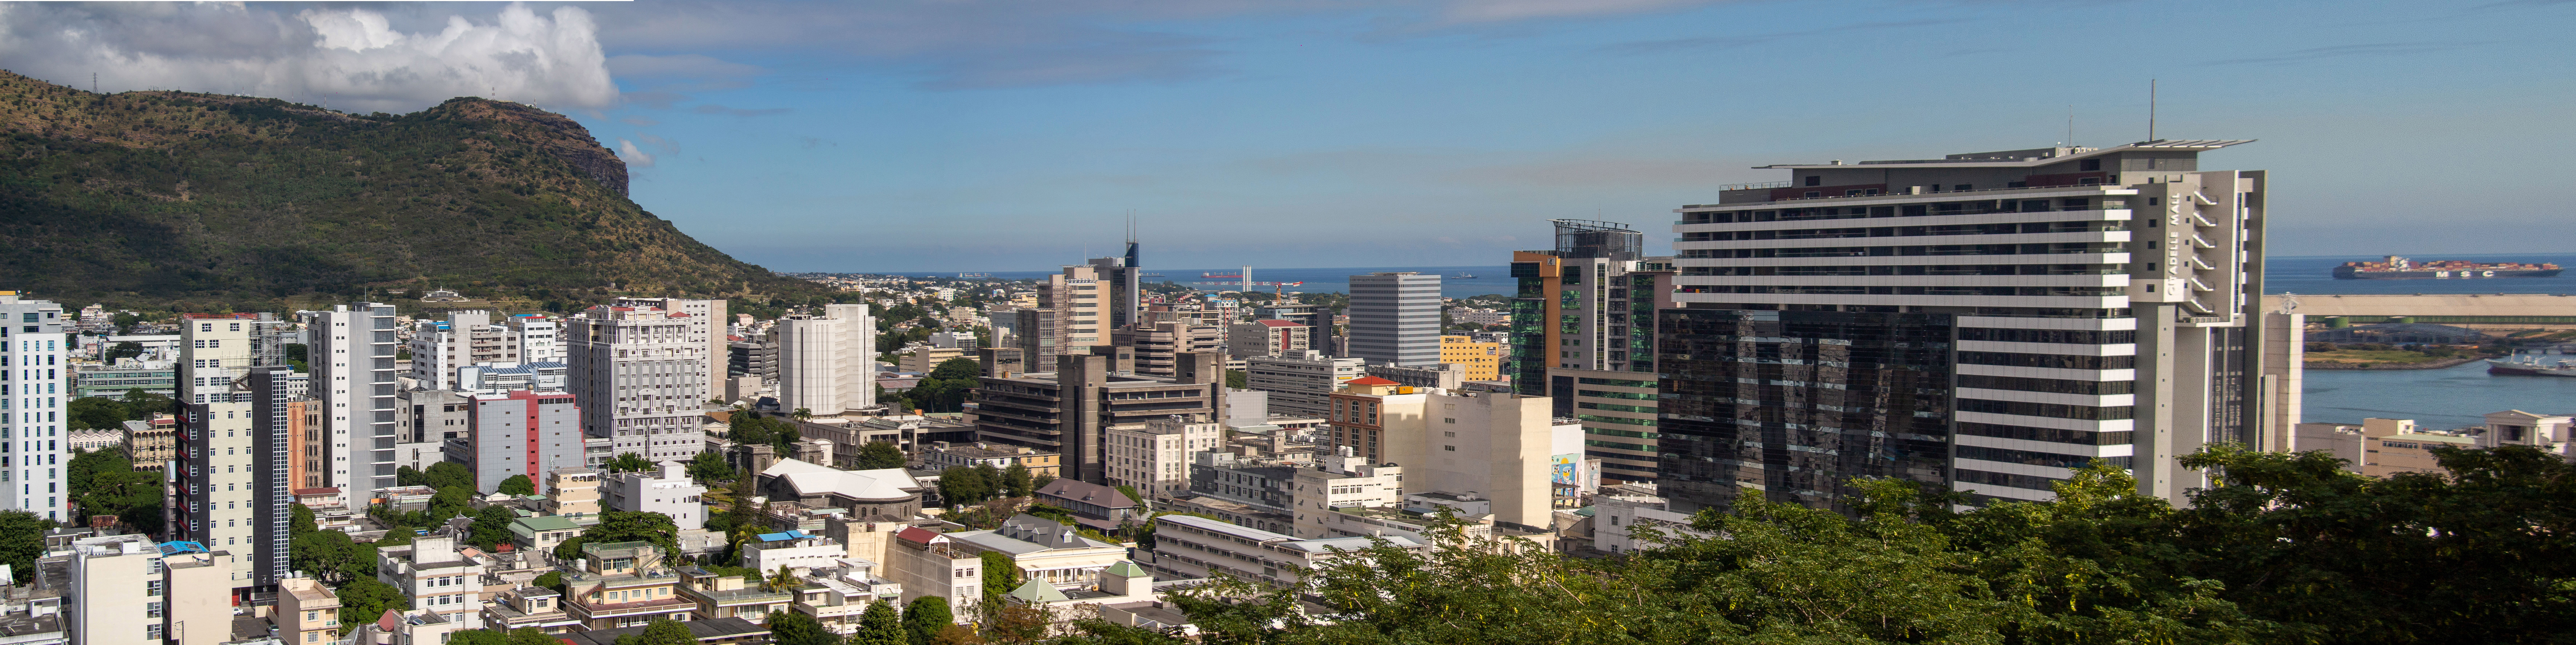 Panoramic view of Port-Louis